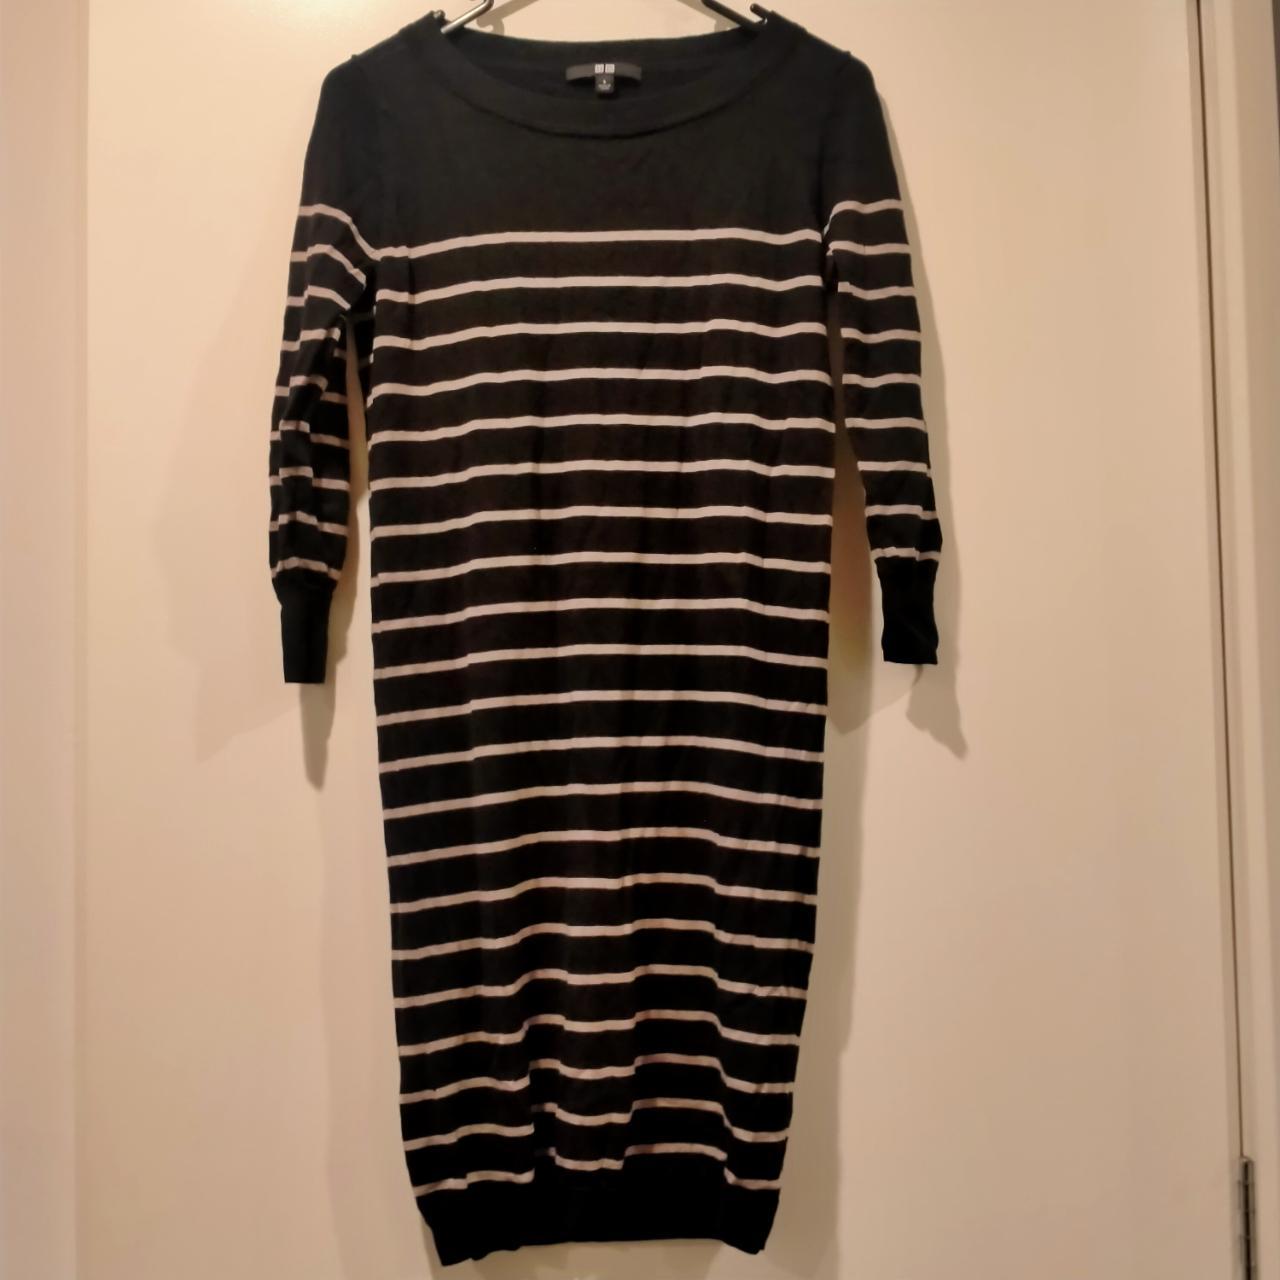 Uniqlo - Black/white striped knit dress. Size: S. - Depop